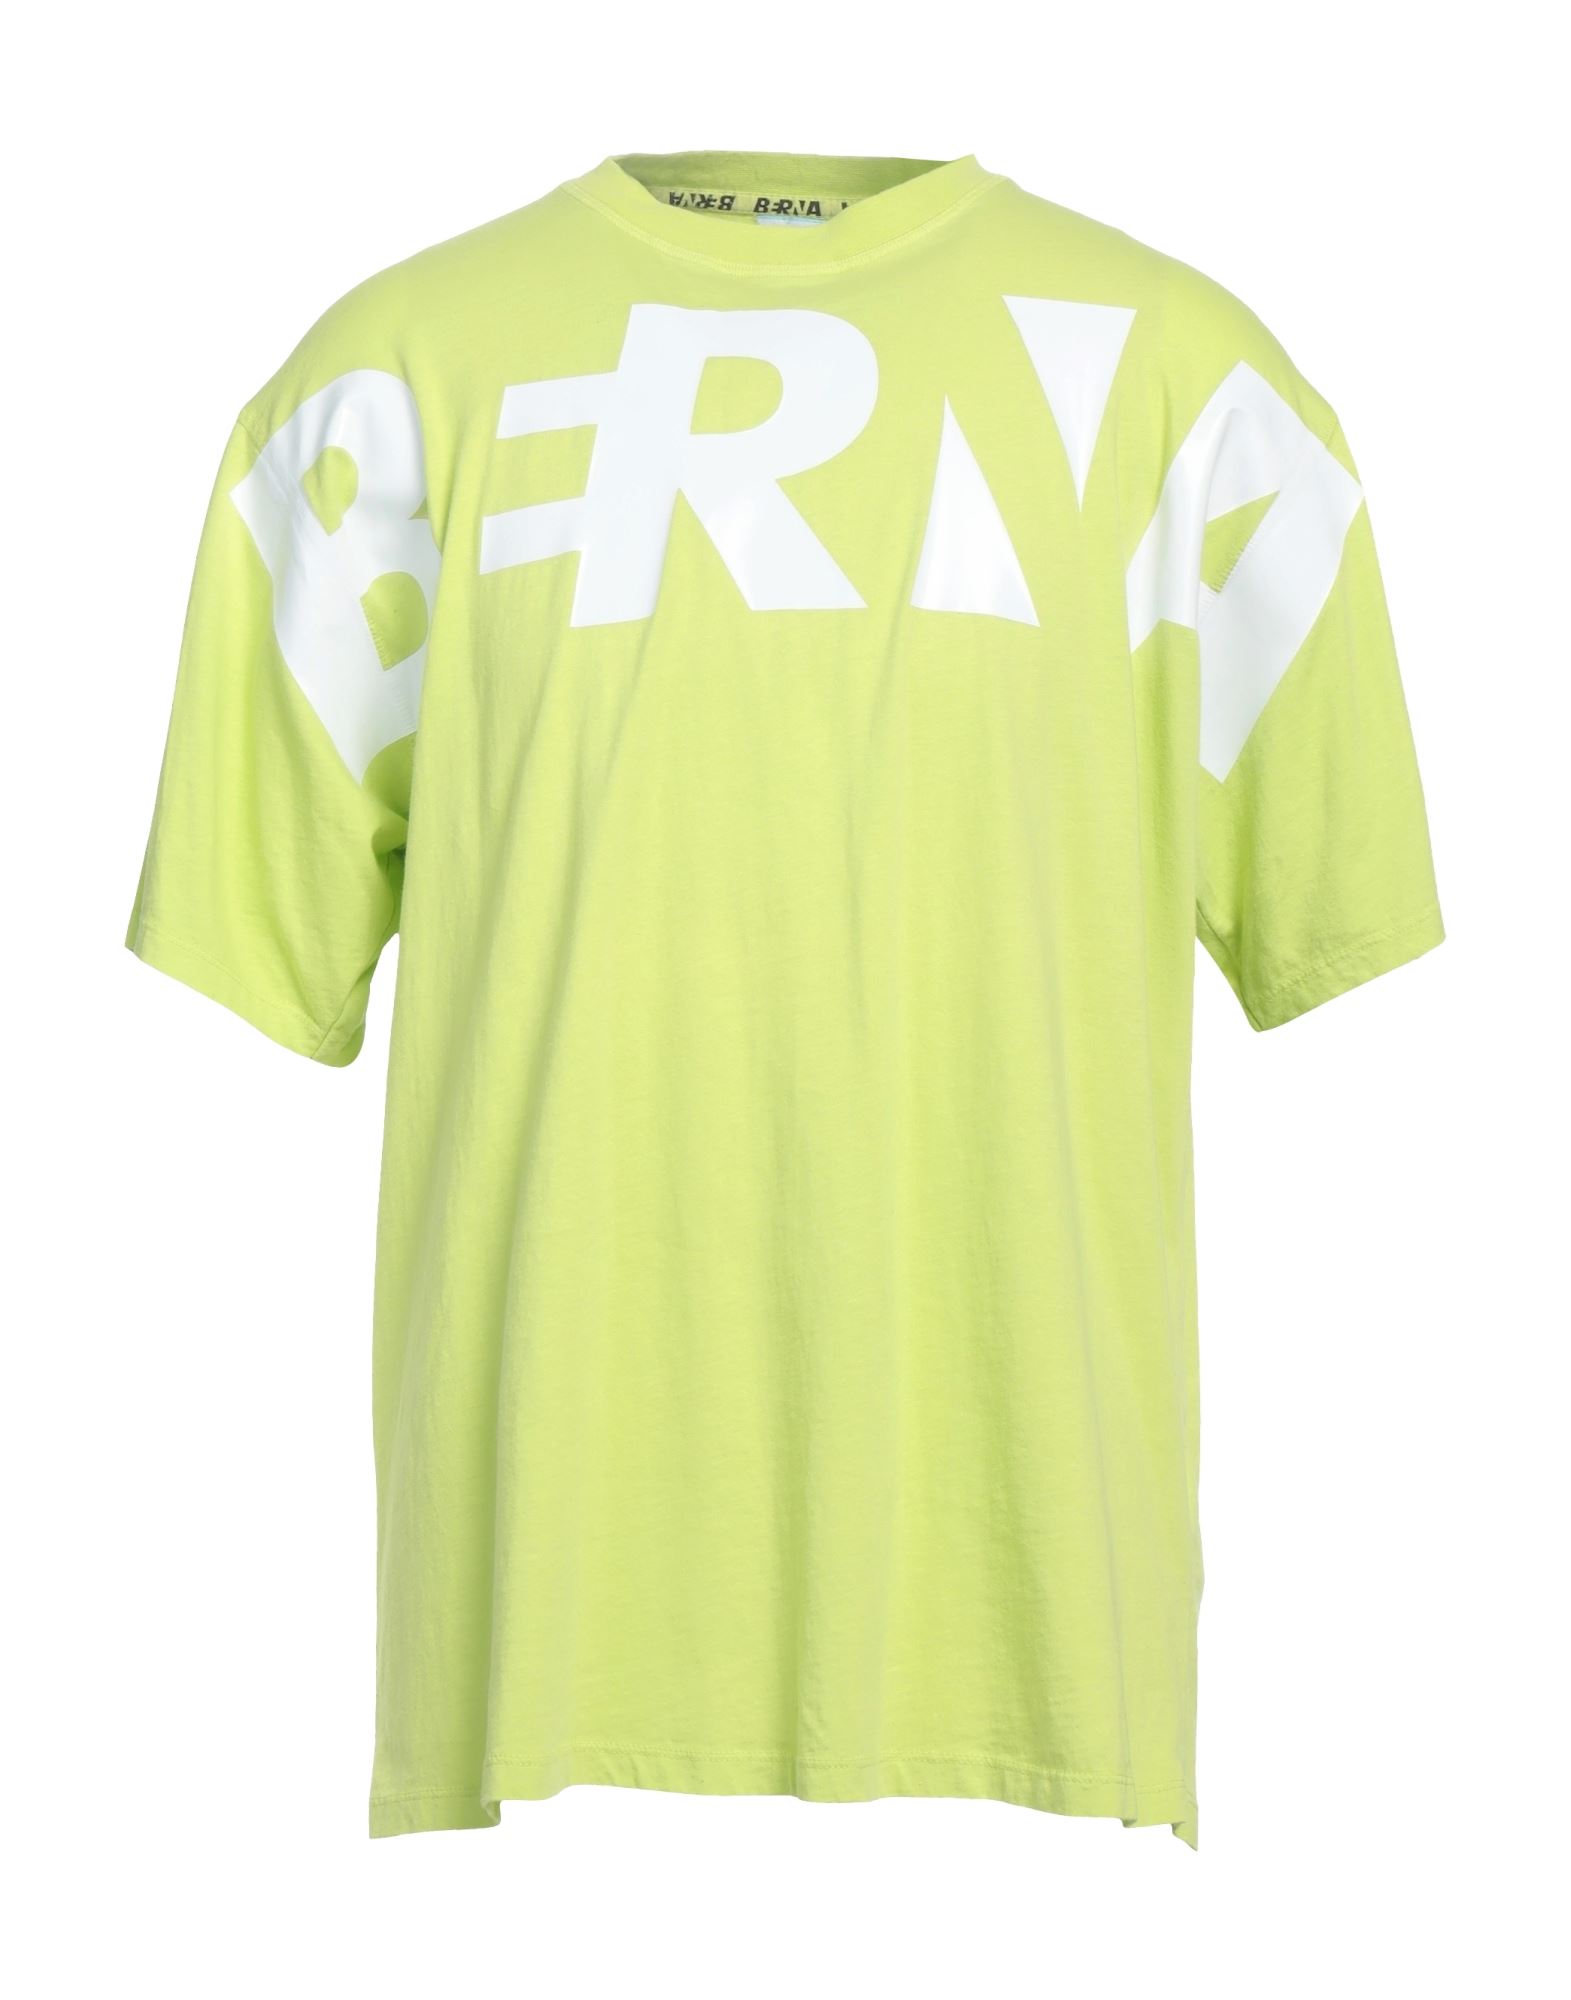 BERNA T-shirts Herren Hellgrün von BERNA